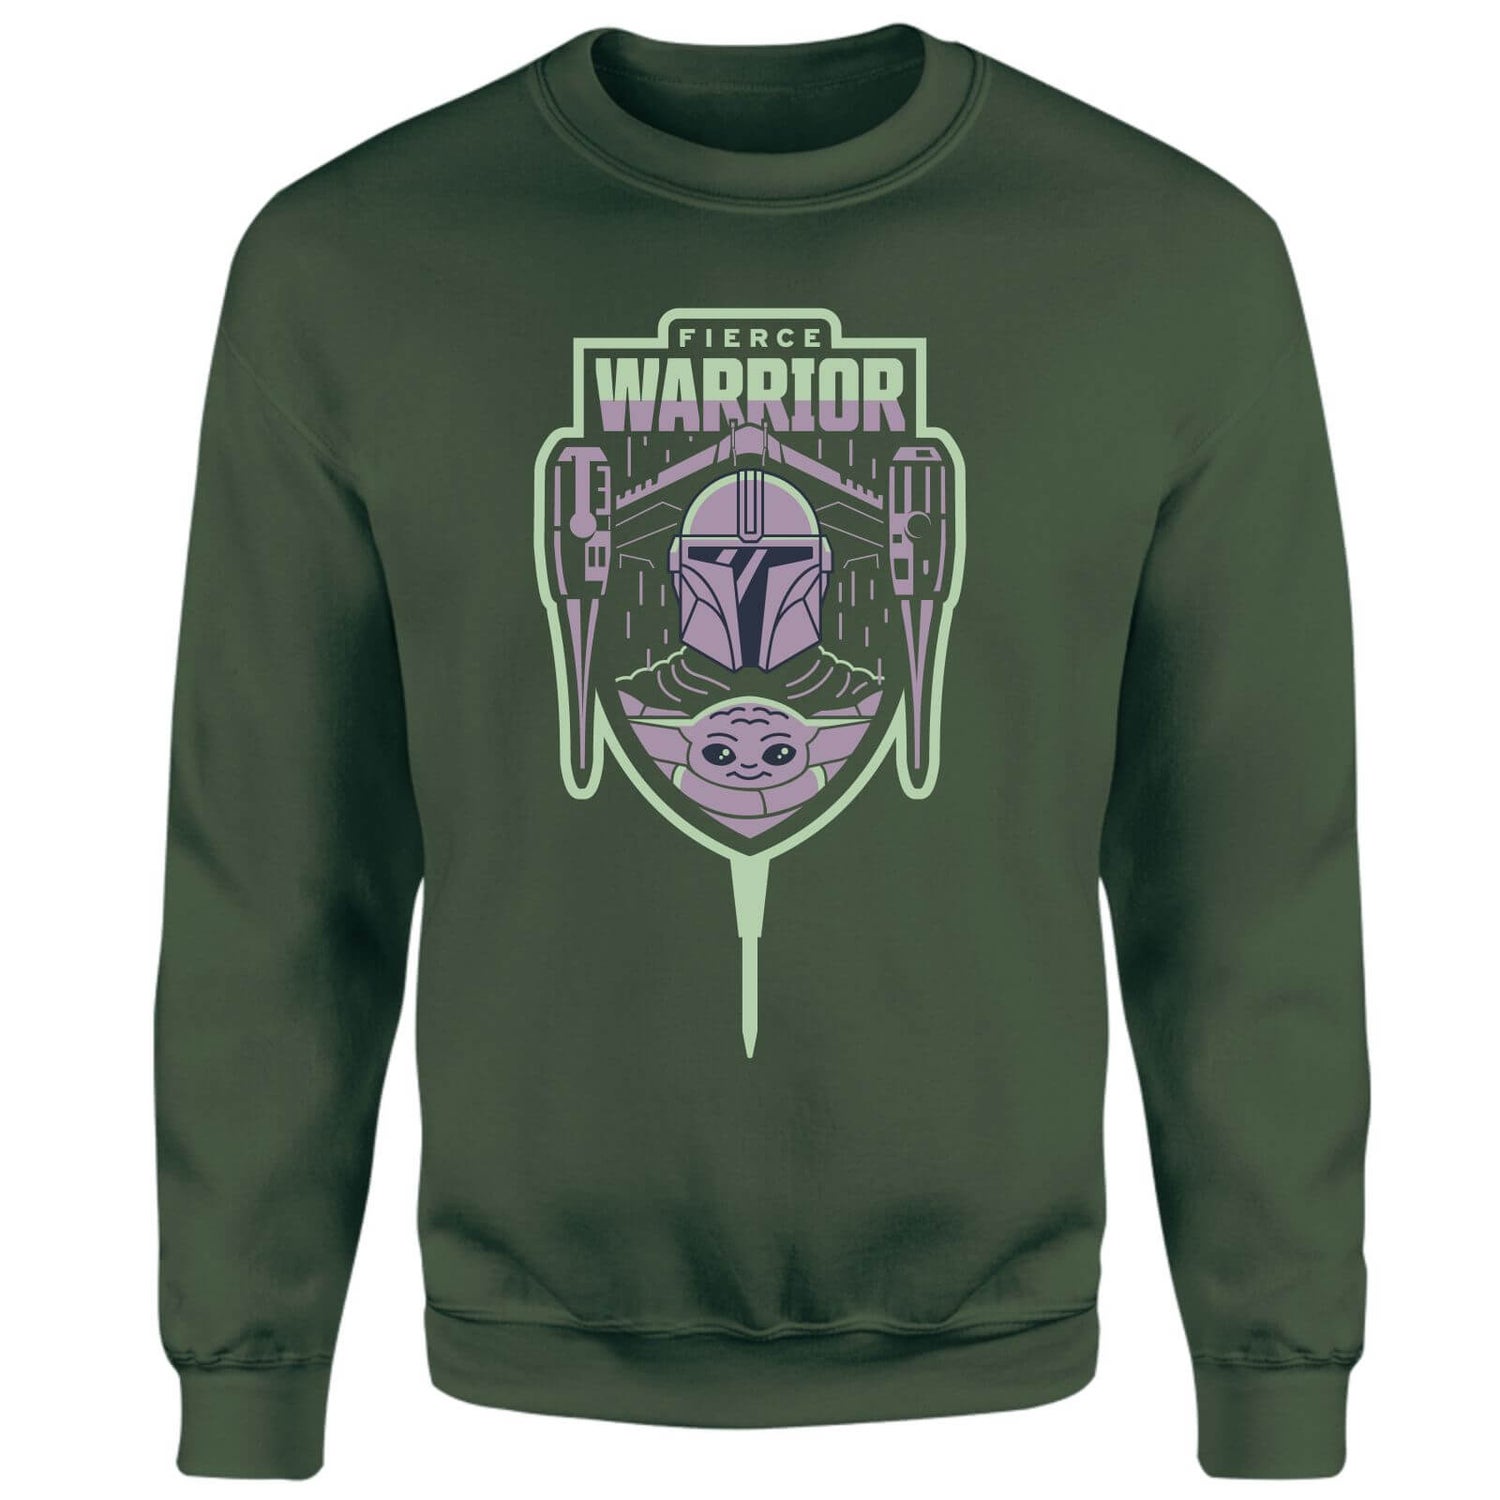 Star Wars The Mandalorian Fierce Warrior Sweatshirt - Green